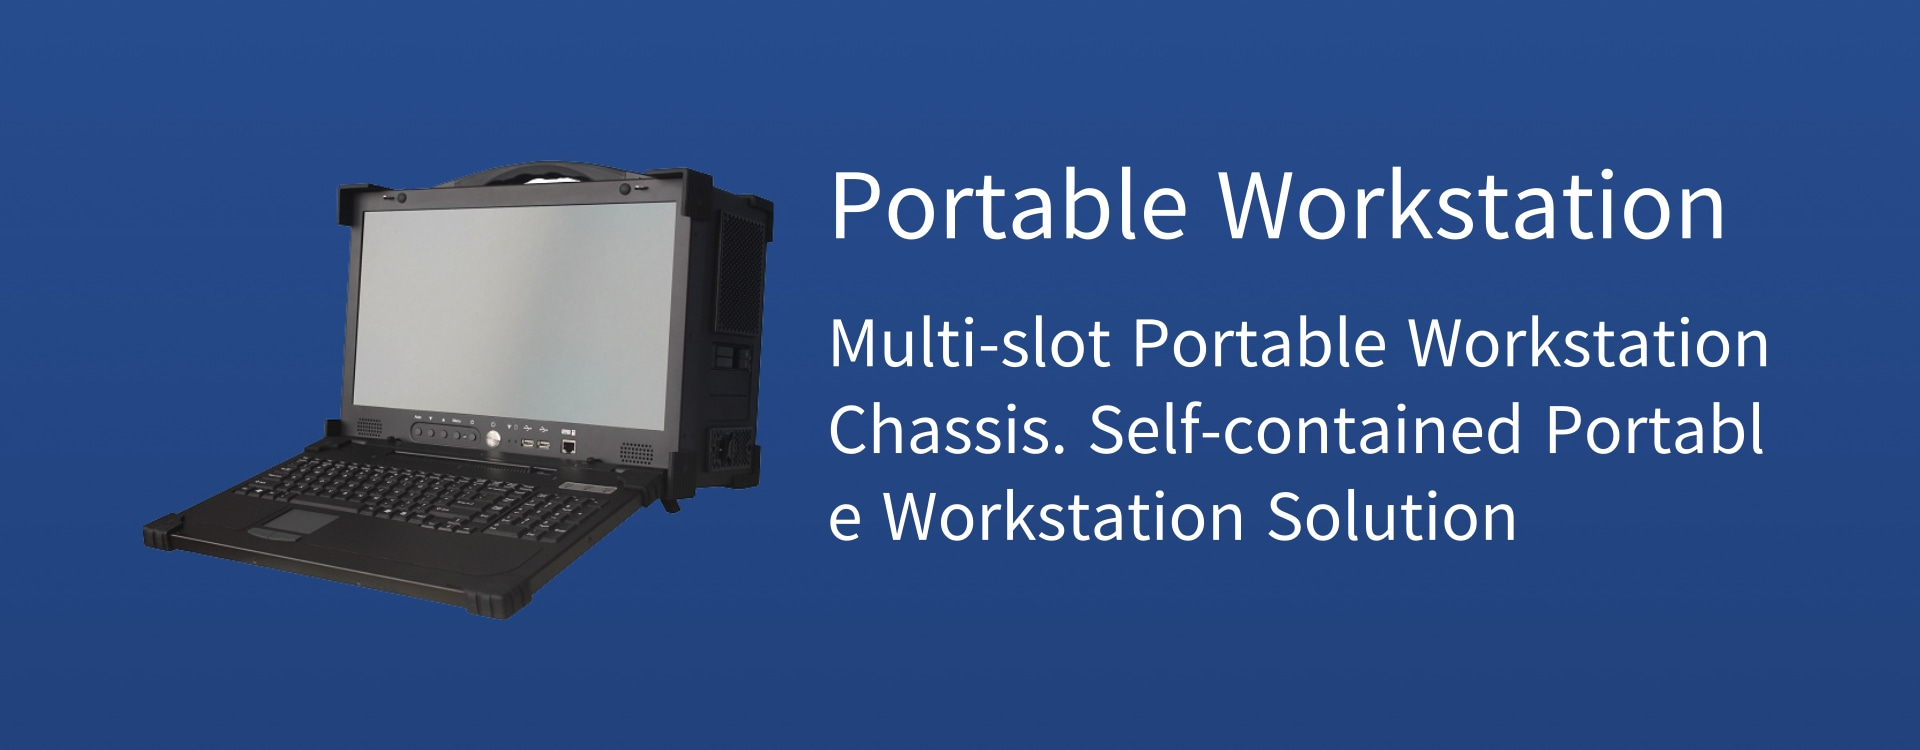 Portable Workstation